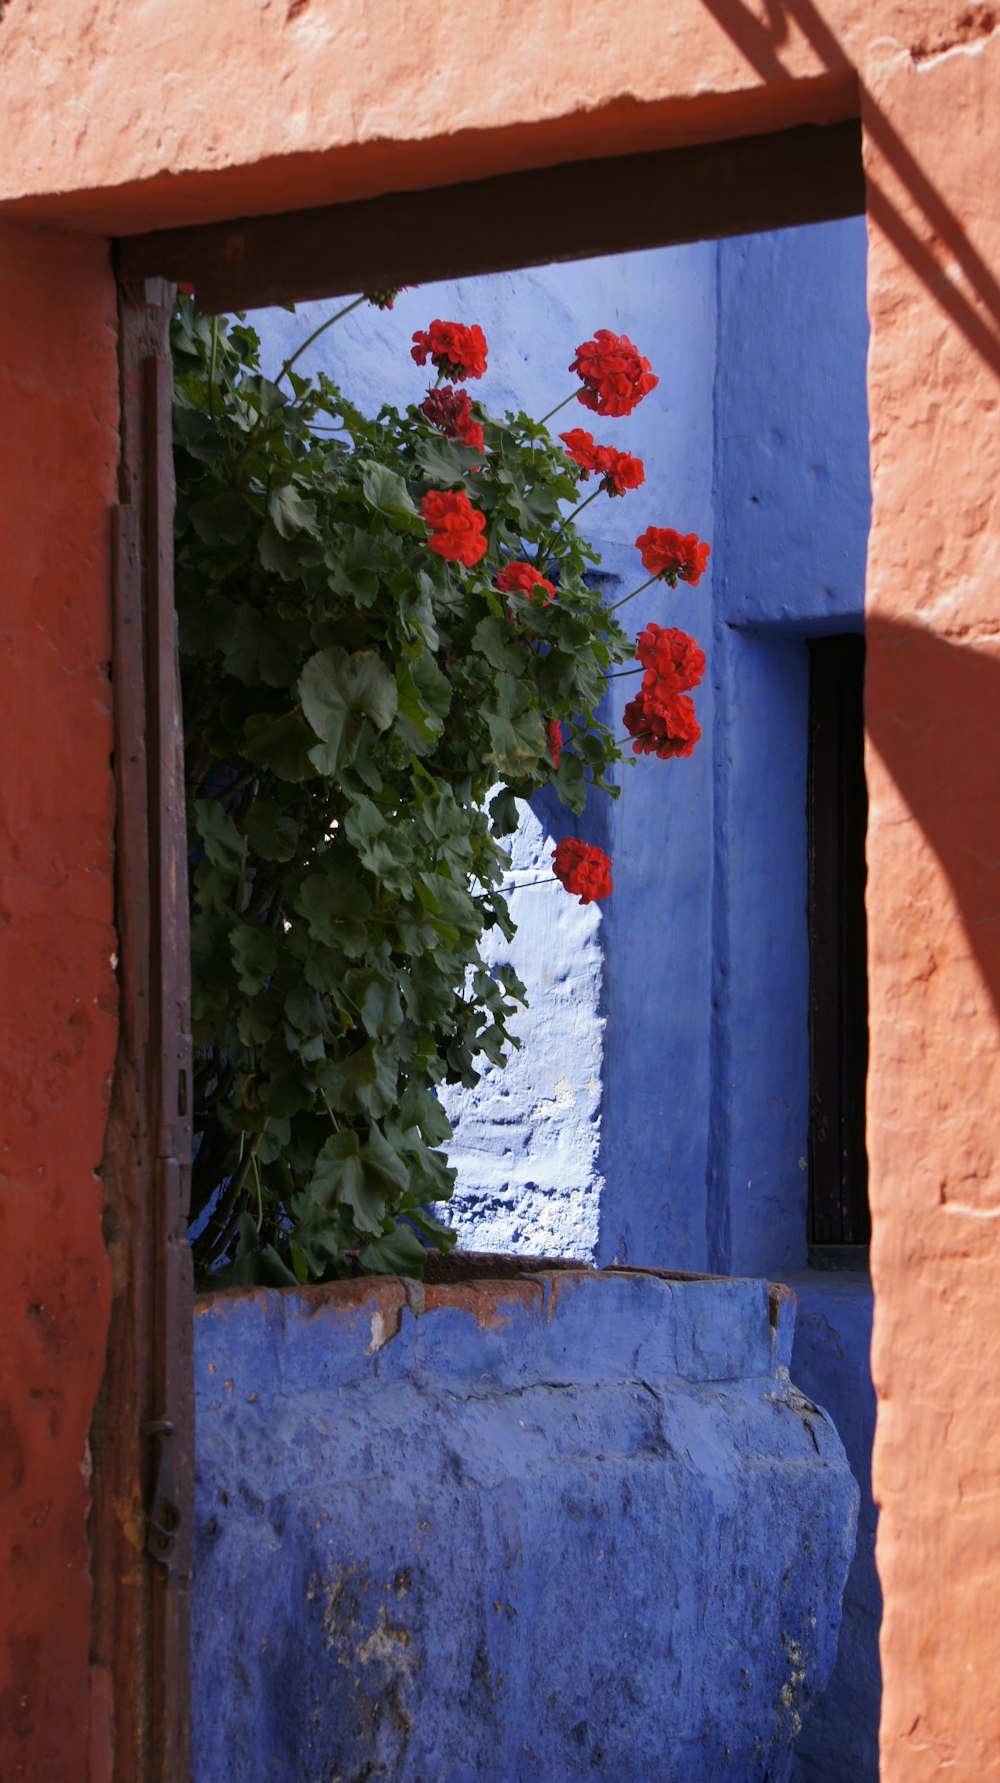 I fiori rossi crescono da una finestra blu